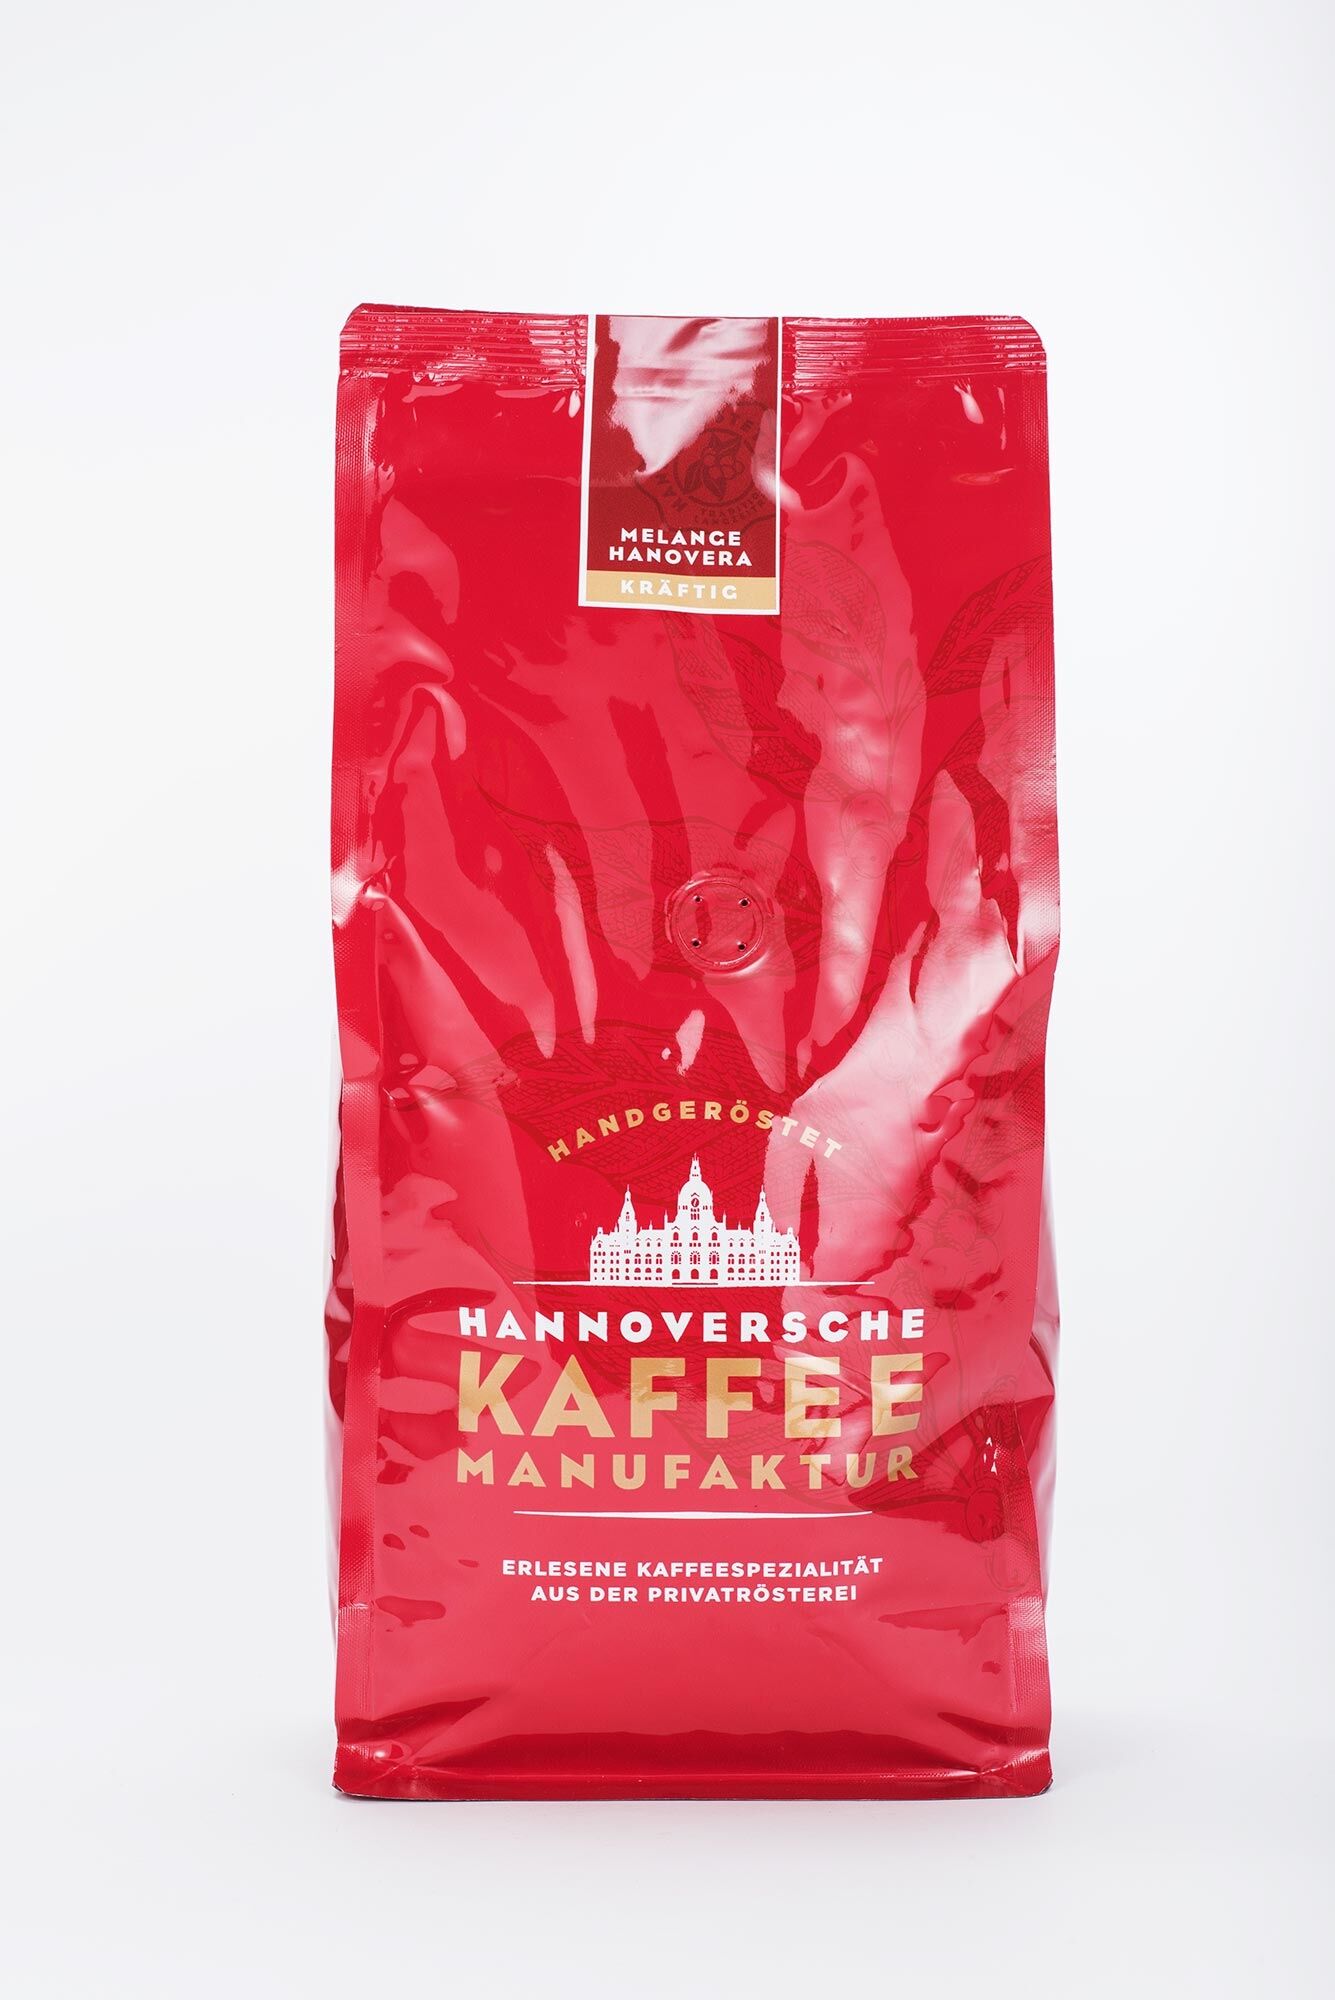 Hannoversche Kaffee Manufaktur Kaffeemanufaktur Melange Hanovera 250g